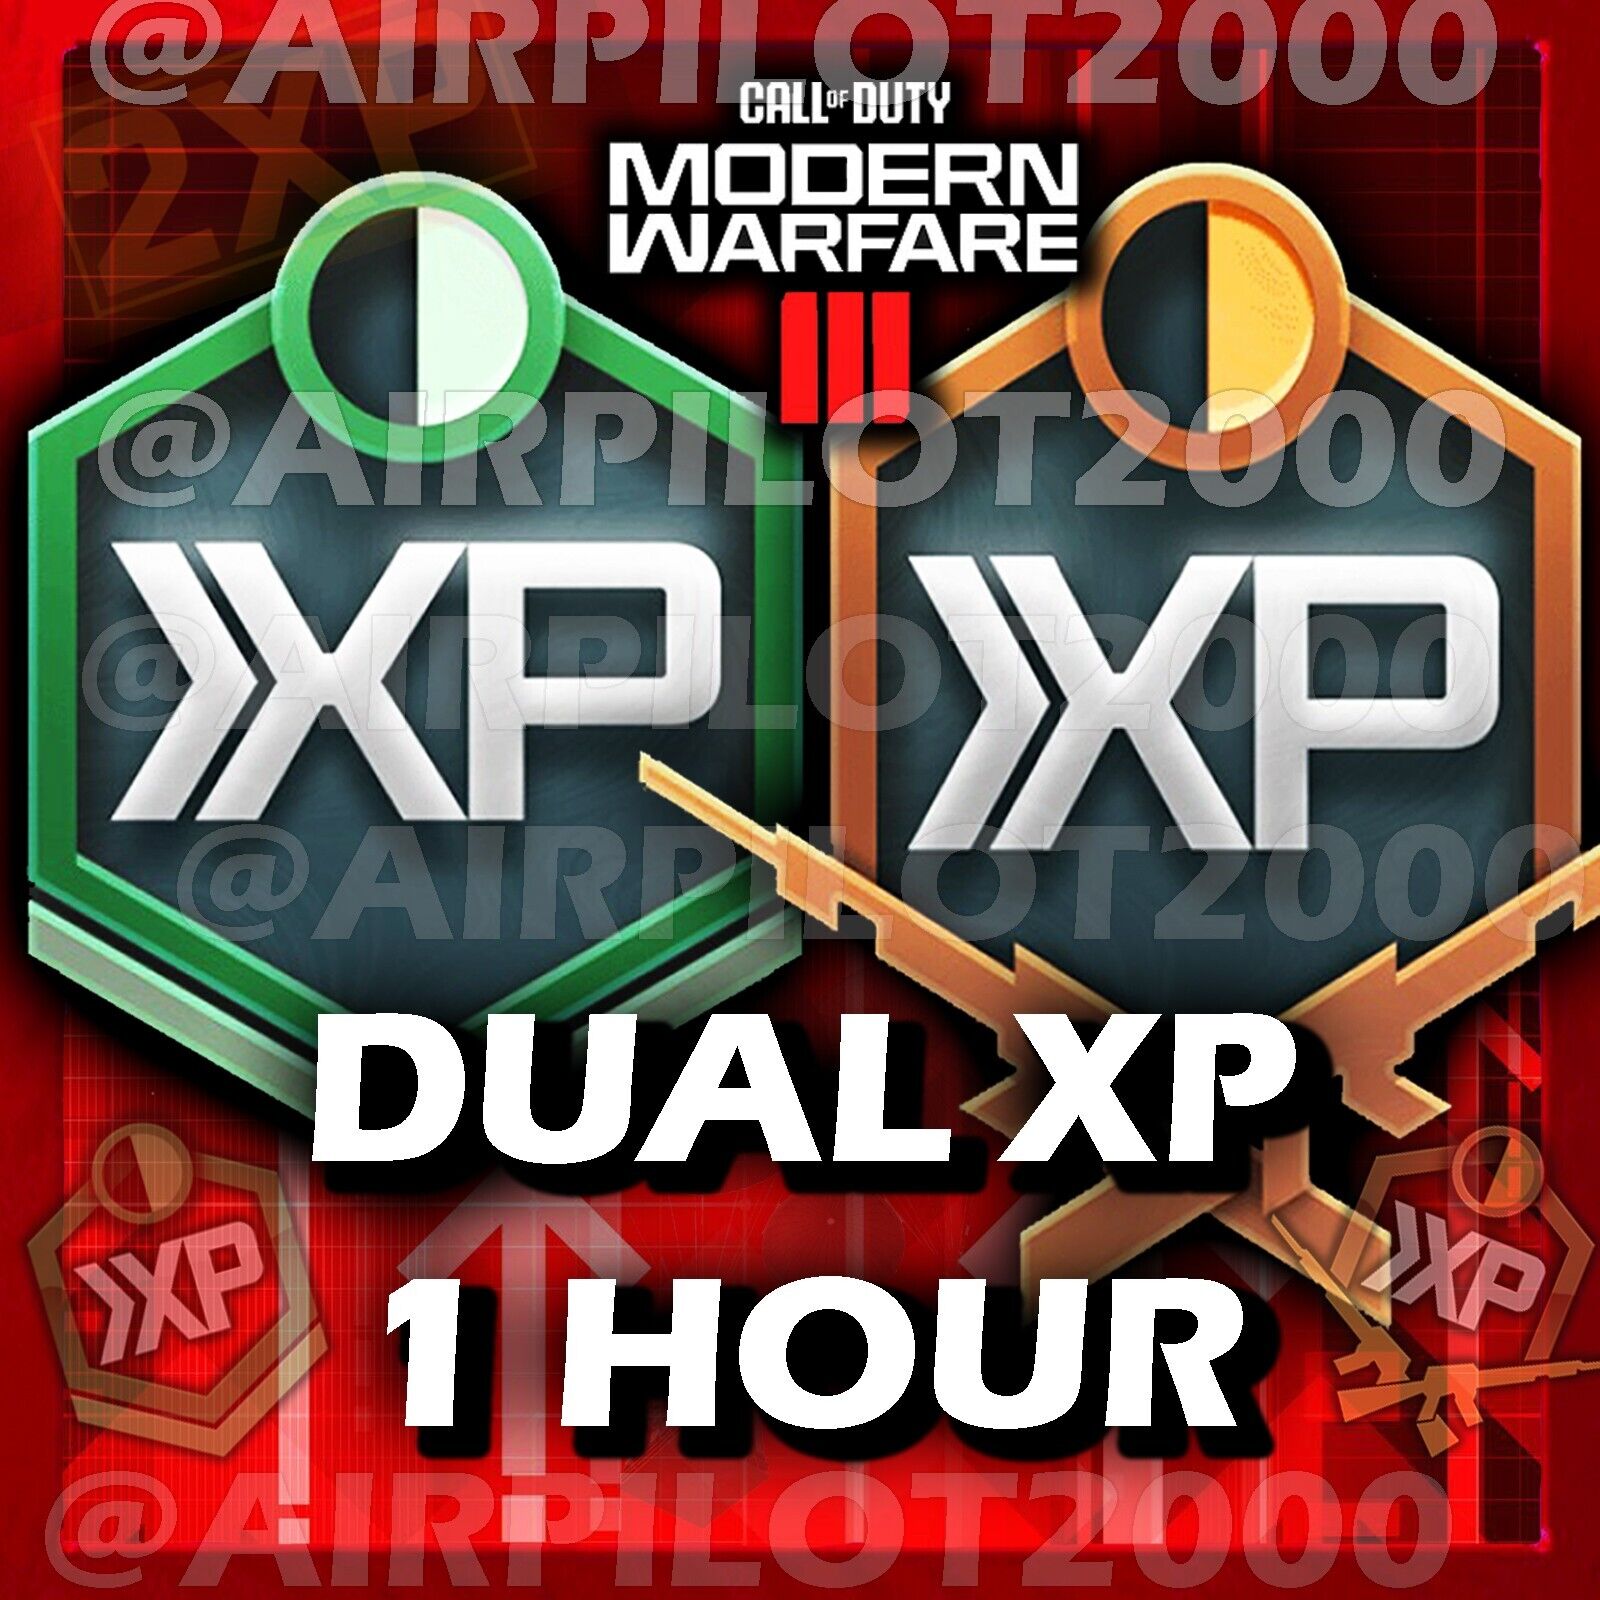 Call of Duty Modern Warfare 3 MW3 1 HOUR 2XP DOUBLE XP - Both - Weapon/Duel